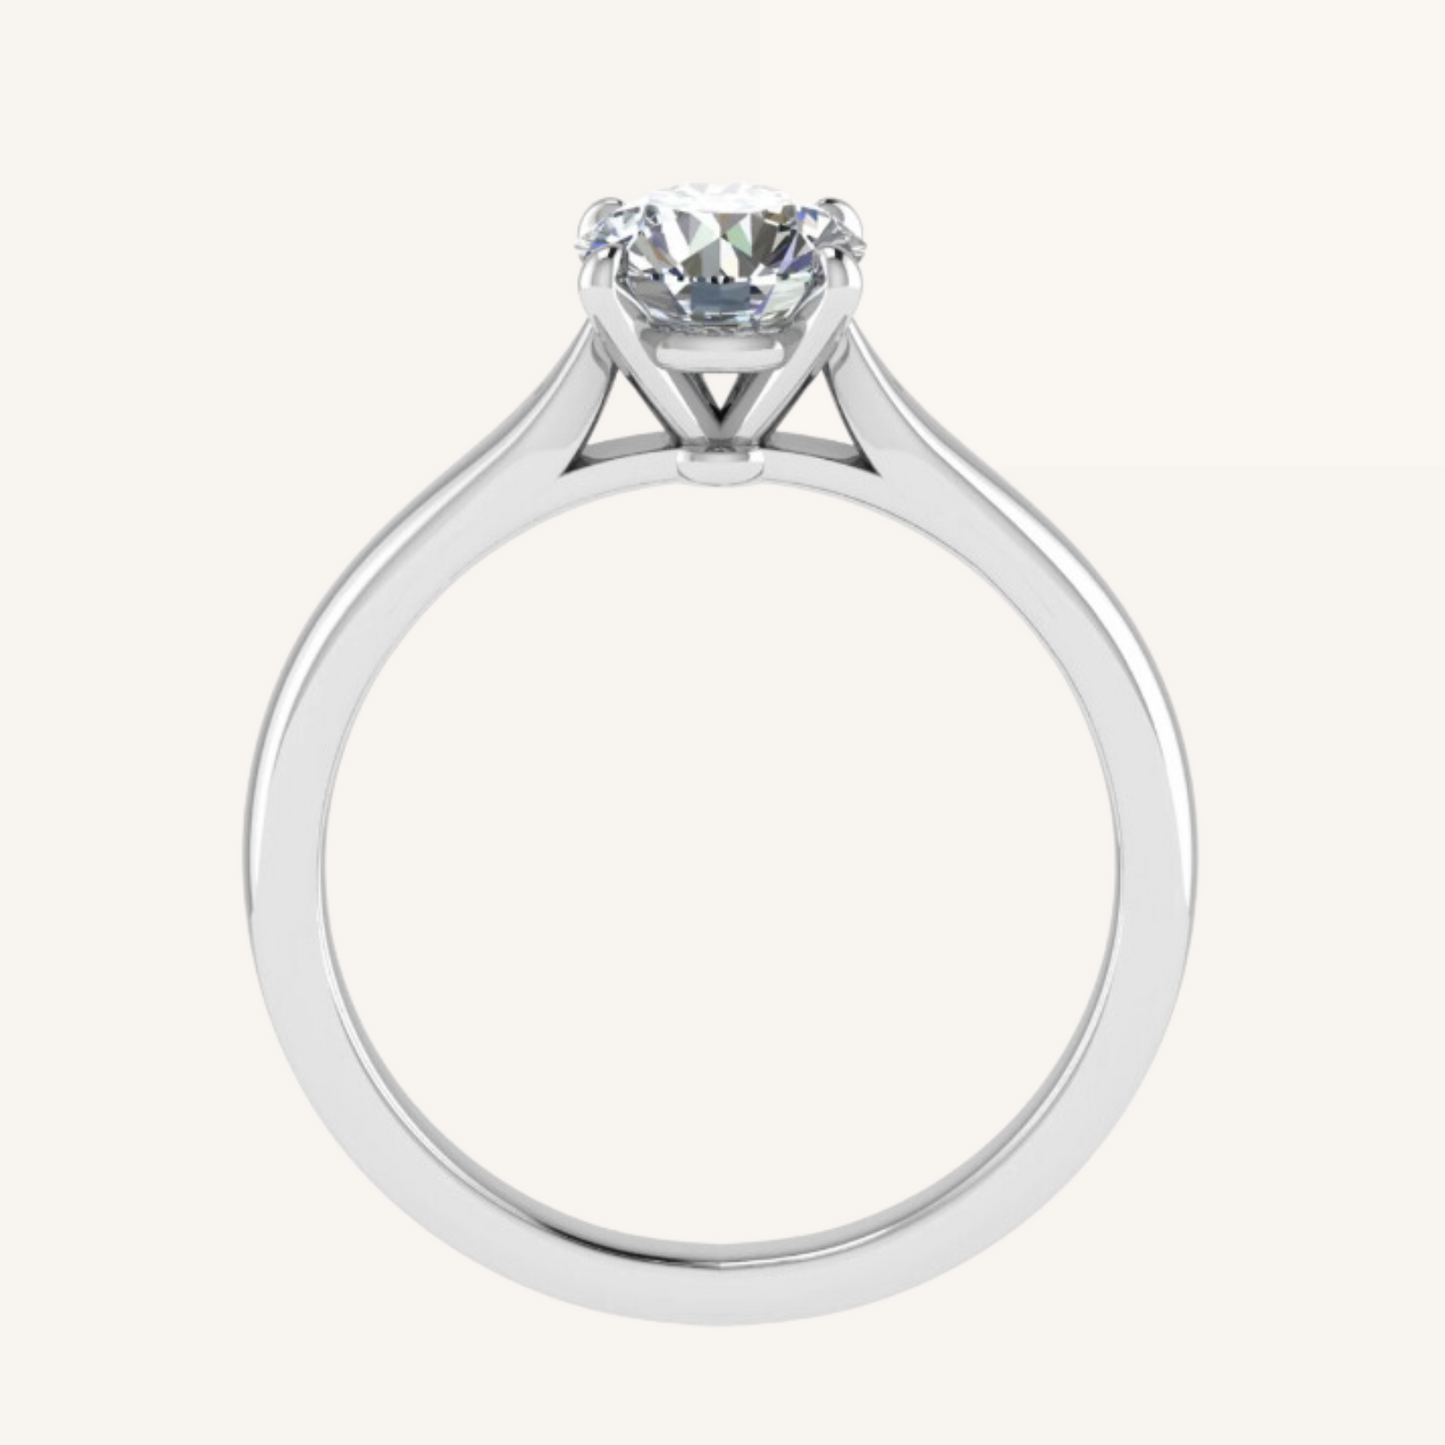 Engagement ring 248